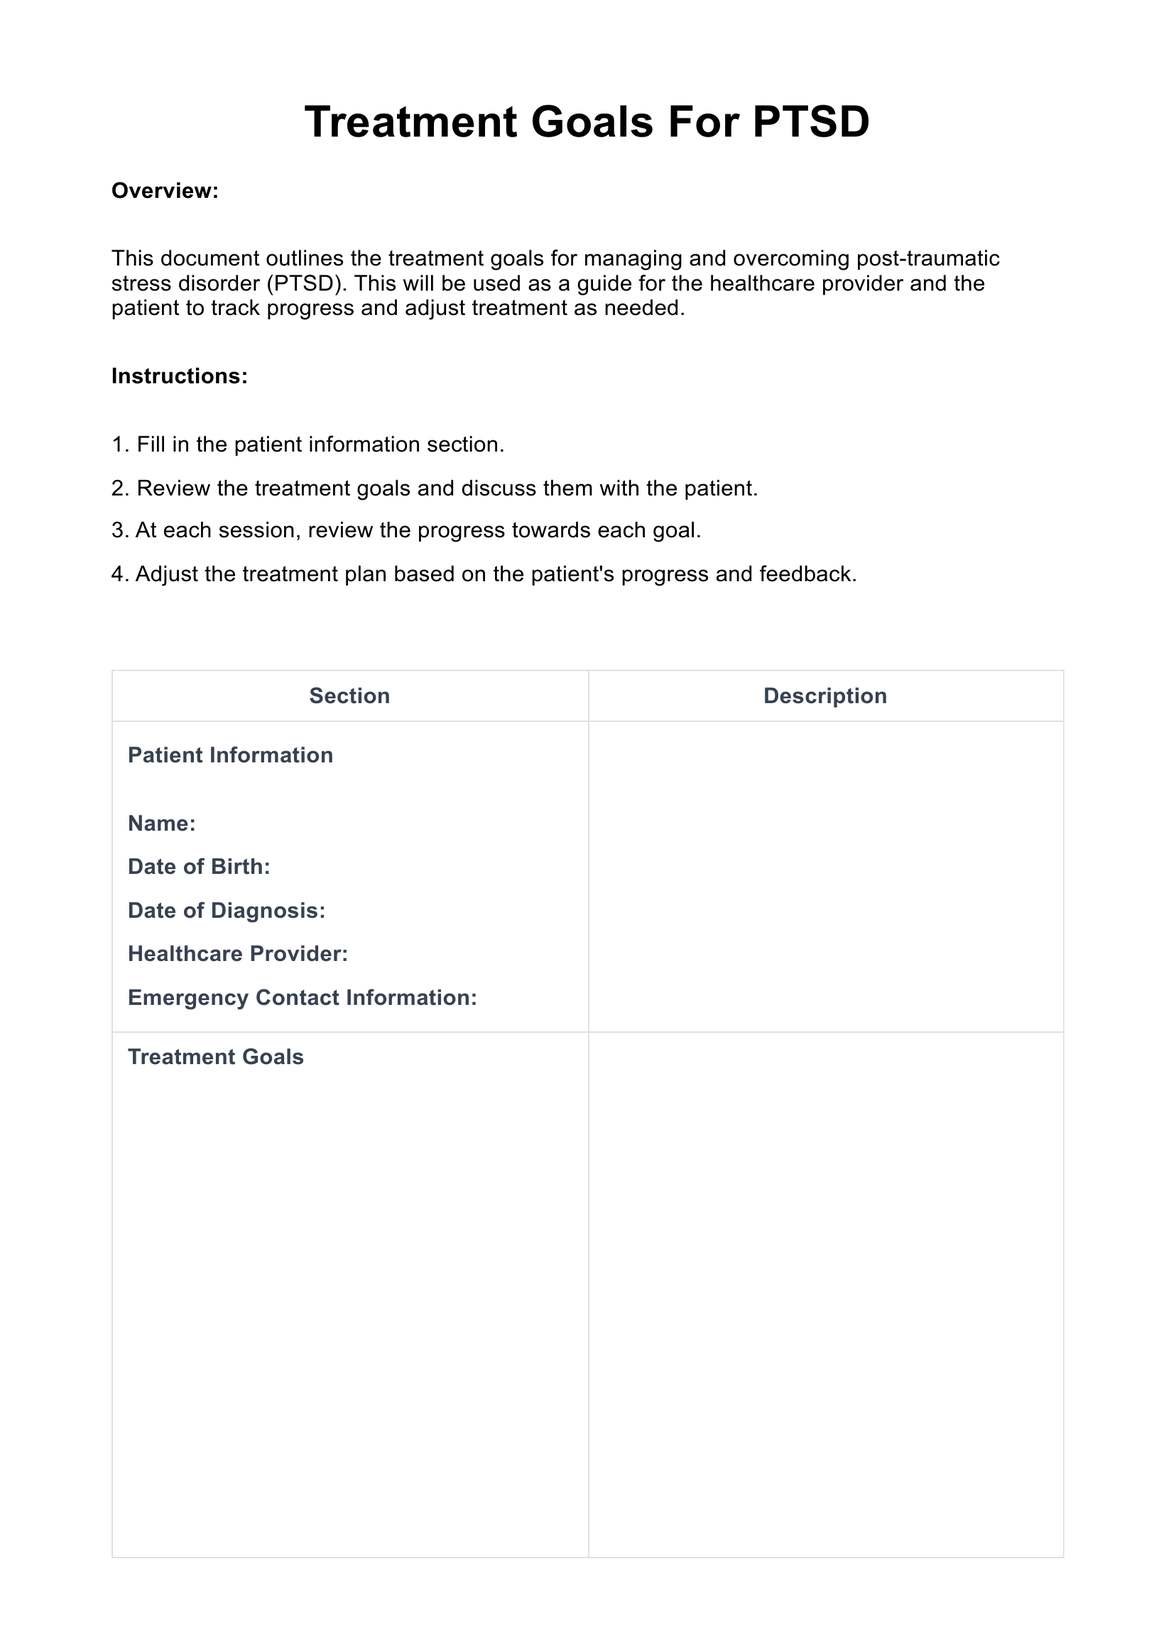 Treatment Goals For PTSD PDF Example